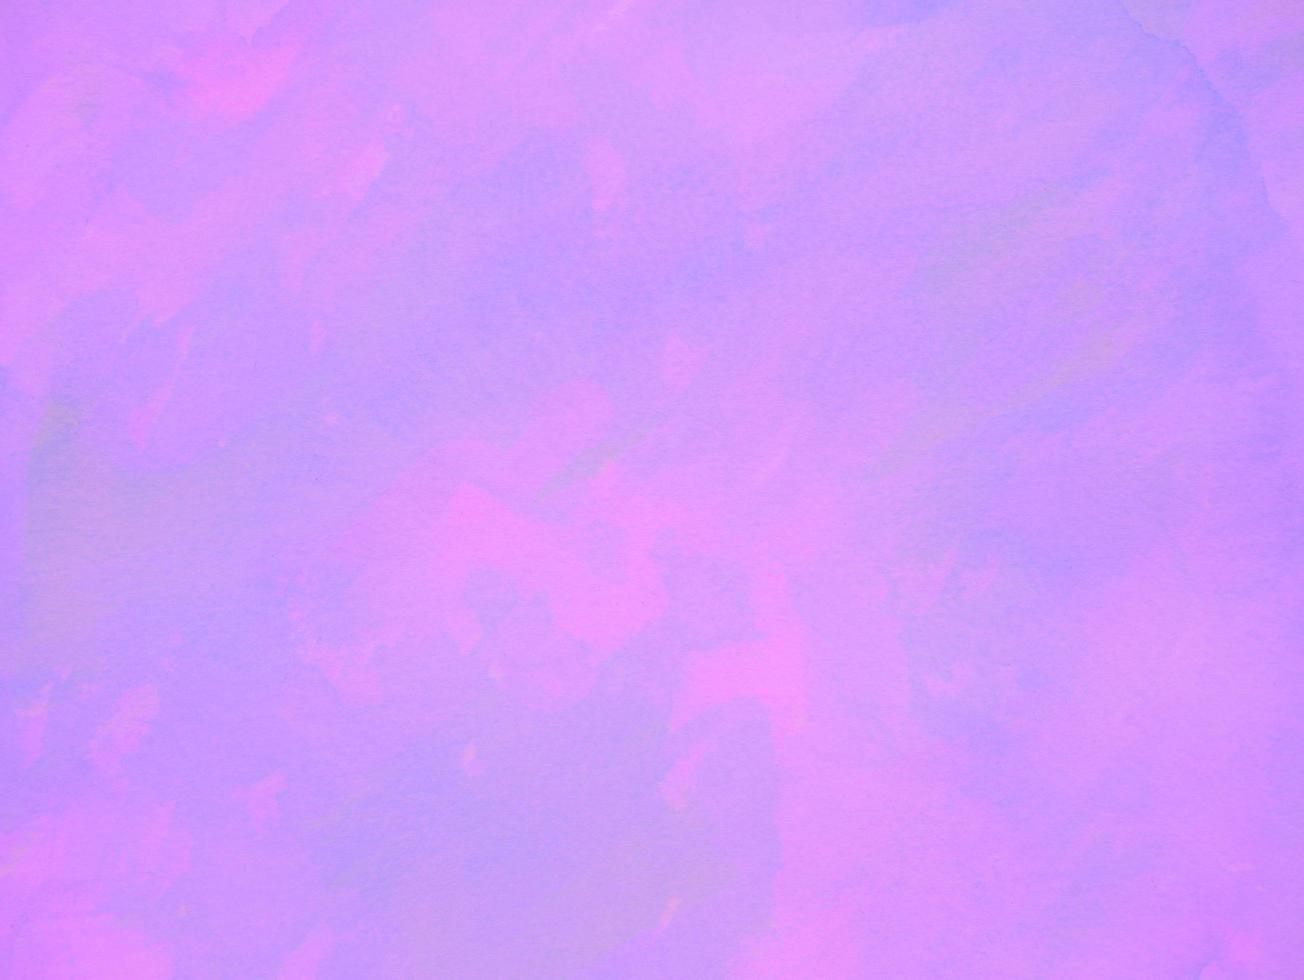 https://static.vecteezy.com/system/resources/previews/002/254/545/non_2x/lilac-pastel-purple-color-watercolor-texture-background-free-photo.jpg